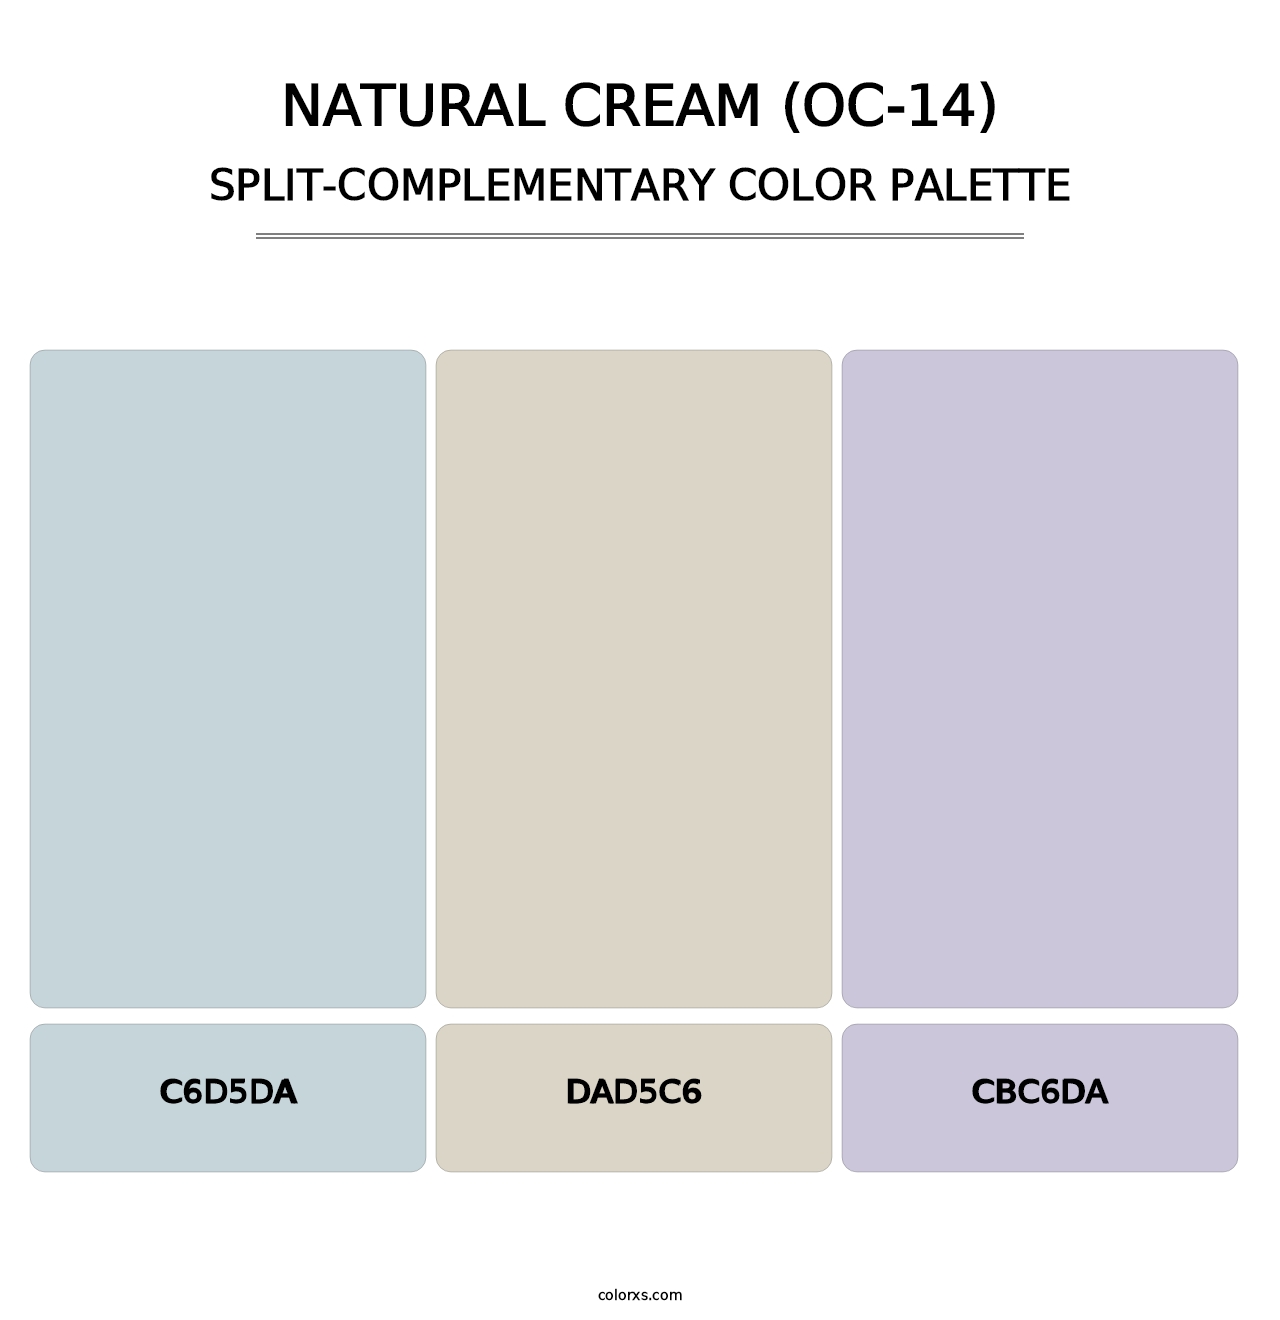 Natural Cream (OC-14) - Split-Complementary Color Palette